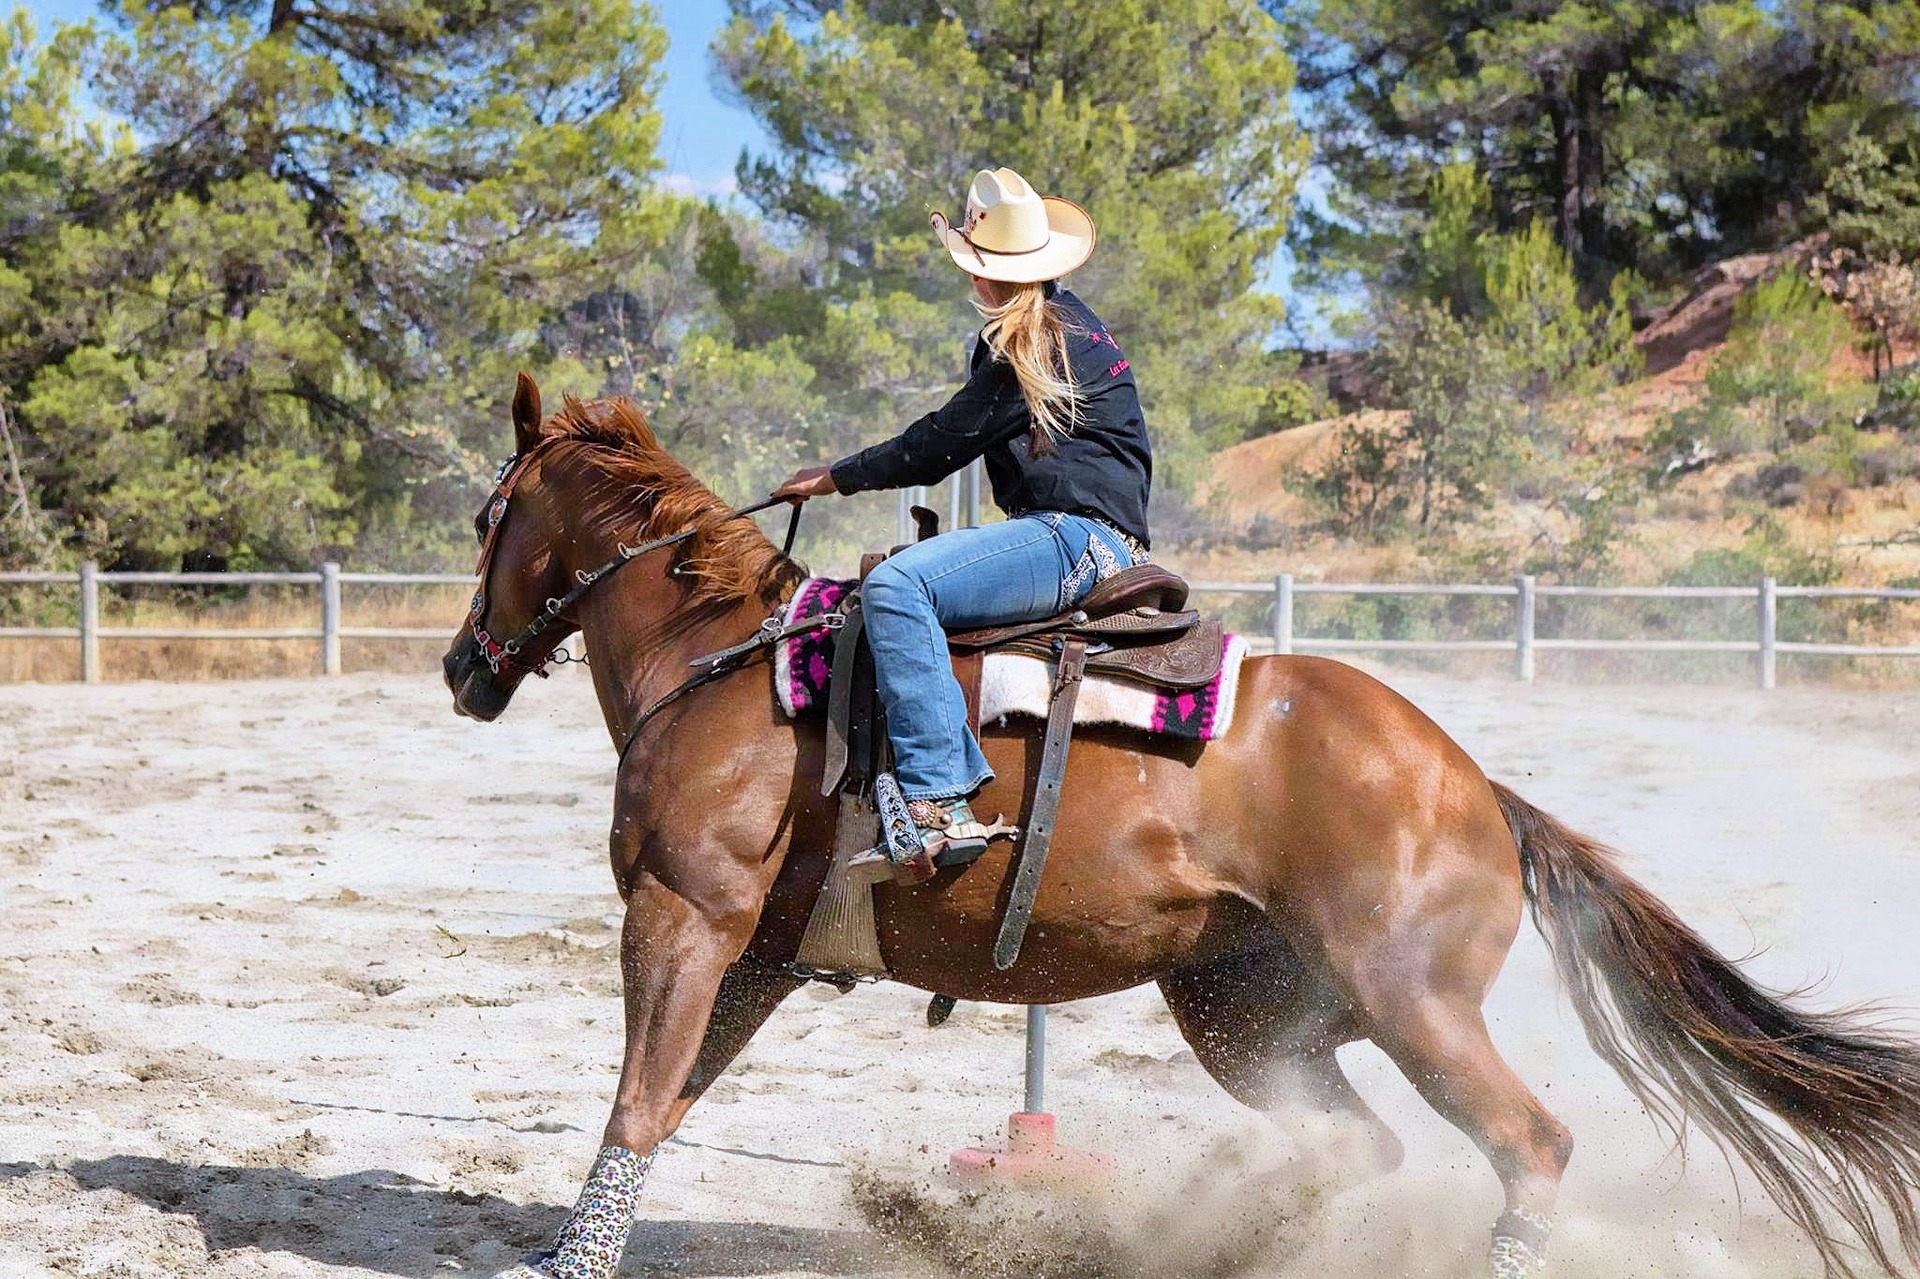 best horse riding jeans